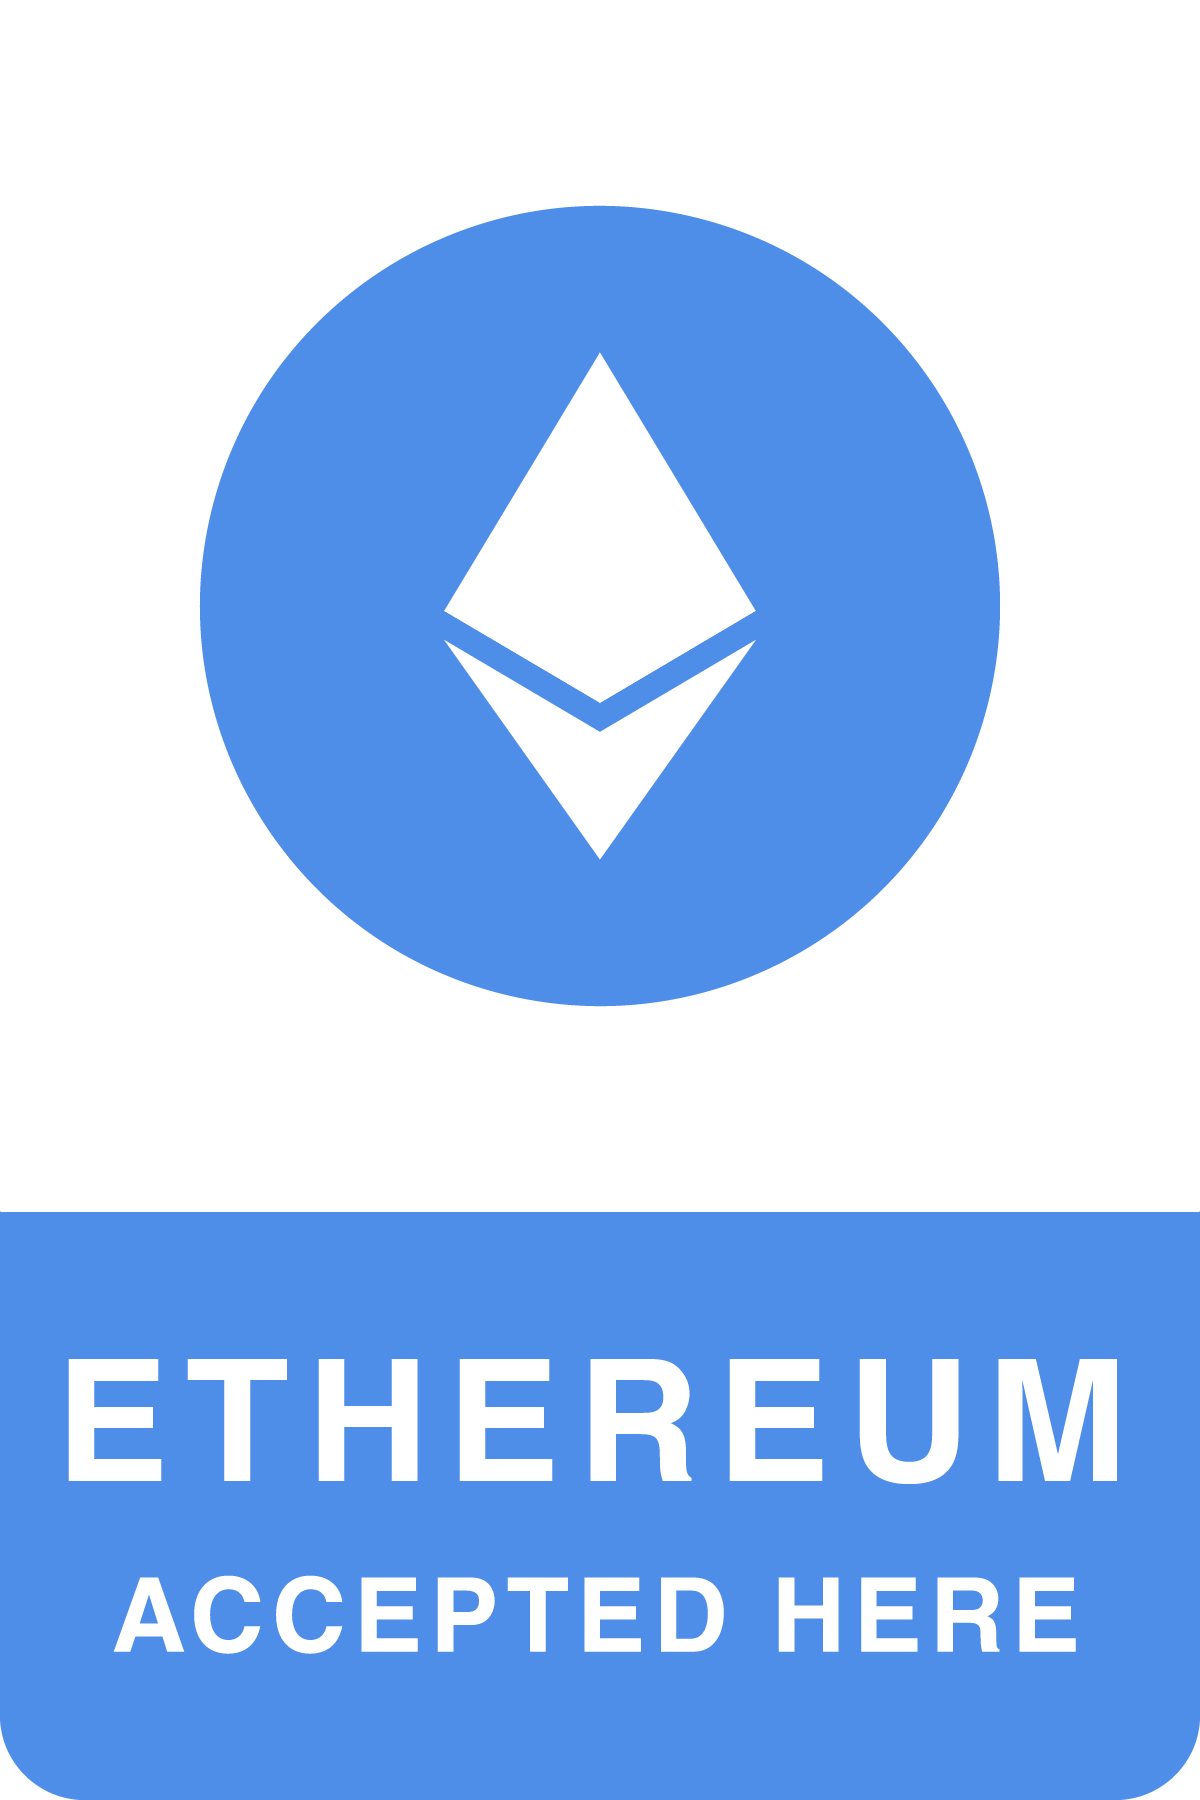 We accept Ethereum